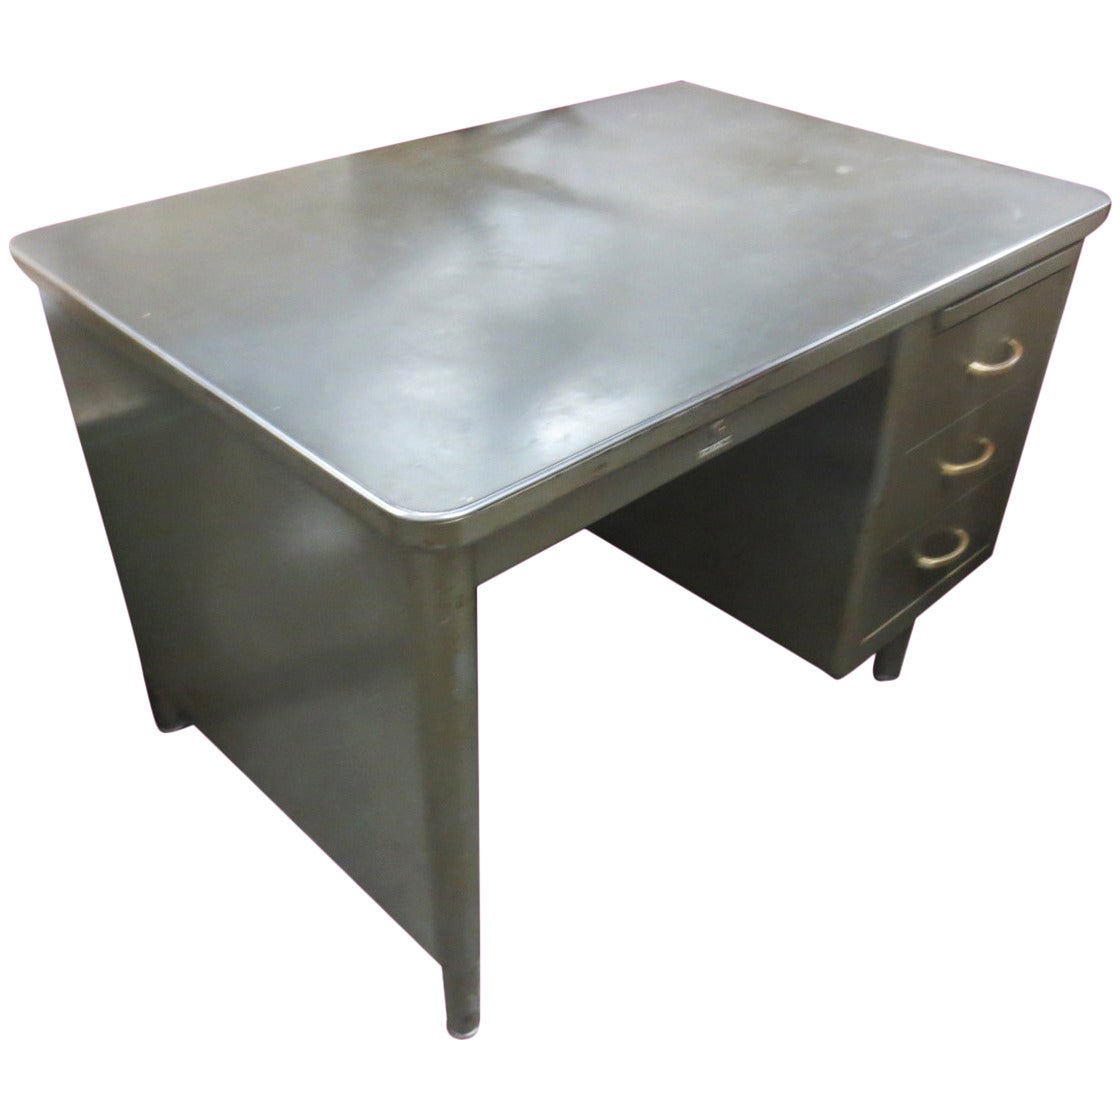 Steelcase Desk For Sale